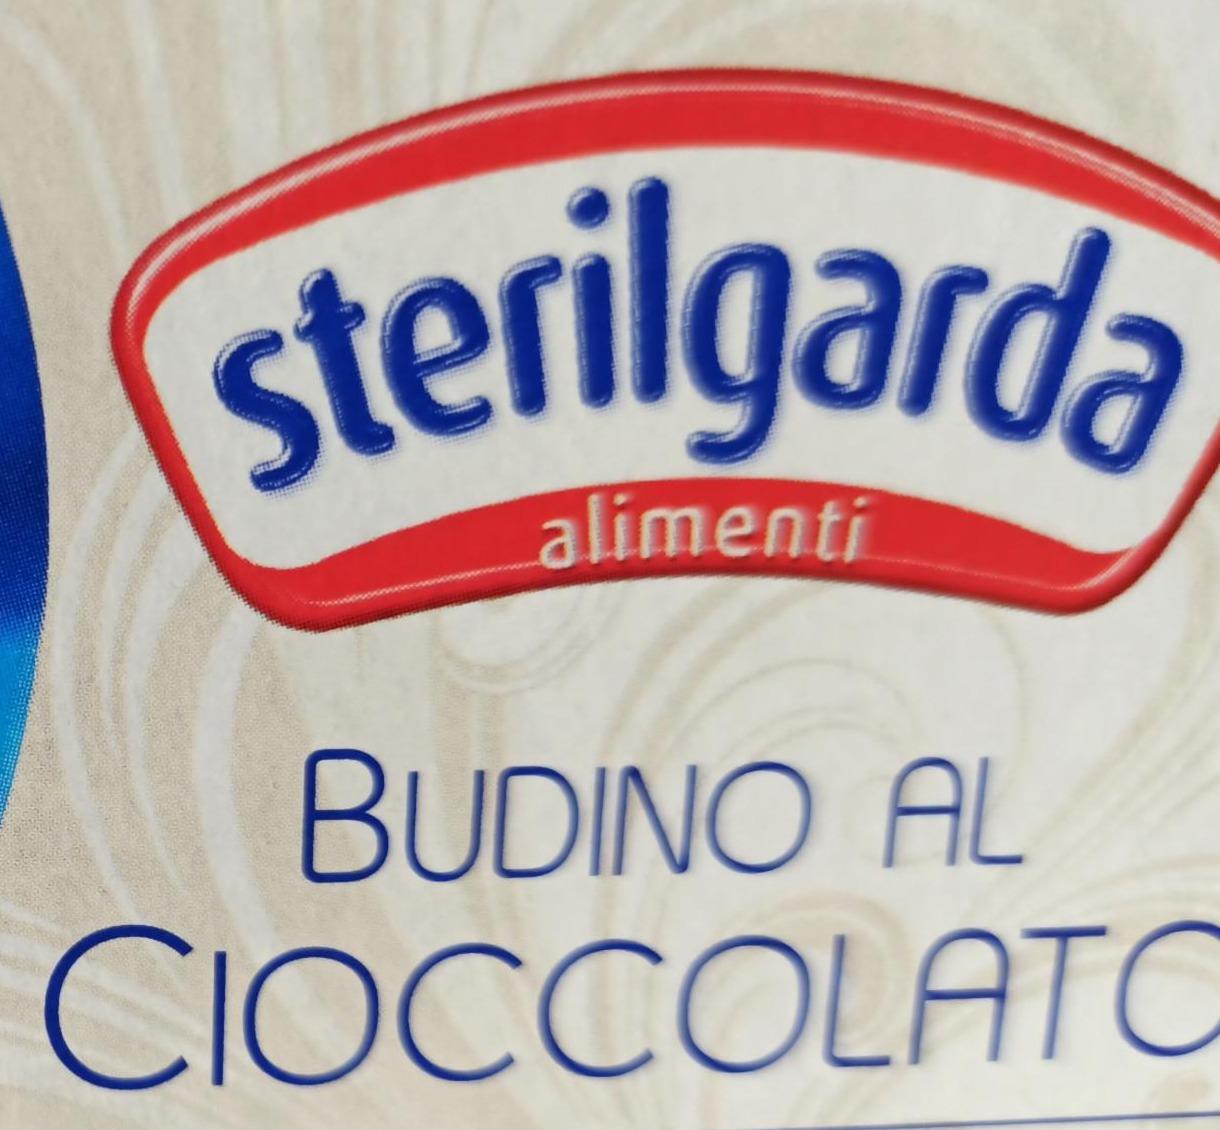 Фото - Пудинг Alimenti шоколадний Sterligarda